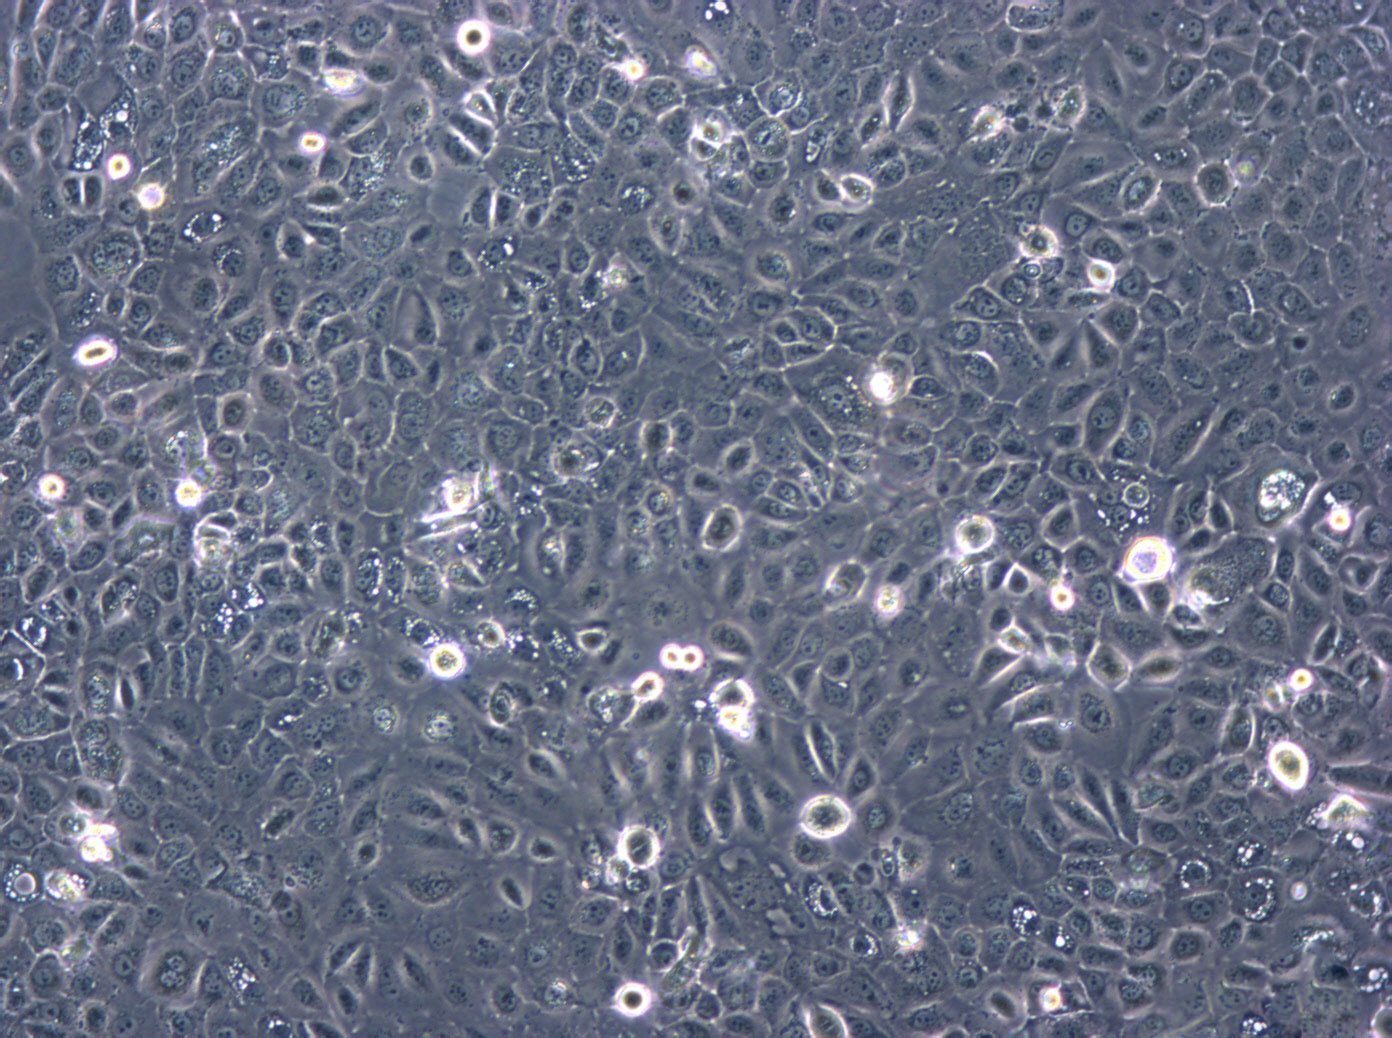 NCI-H2030 epithelioid cells人非小细胞肺癌细胞系